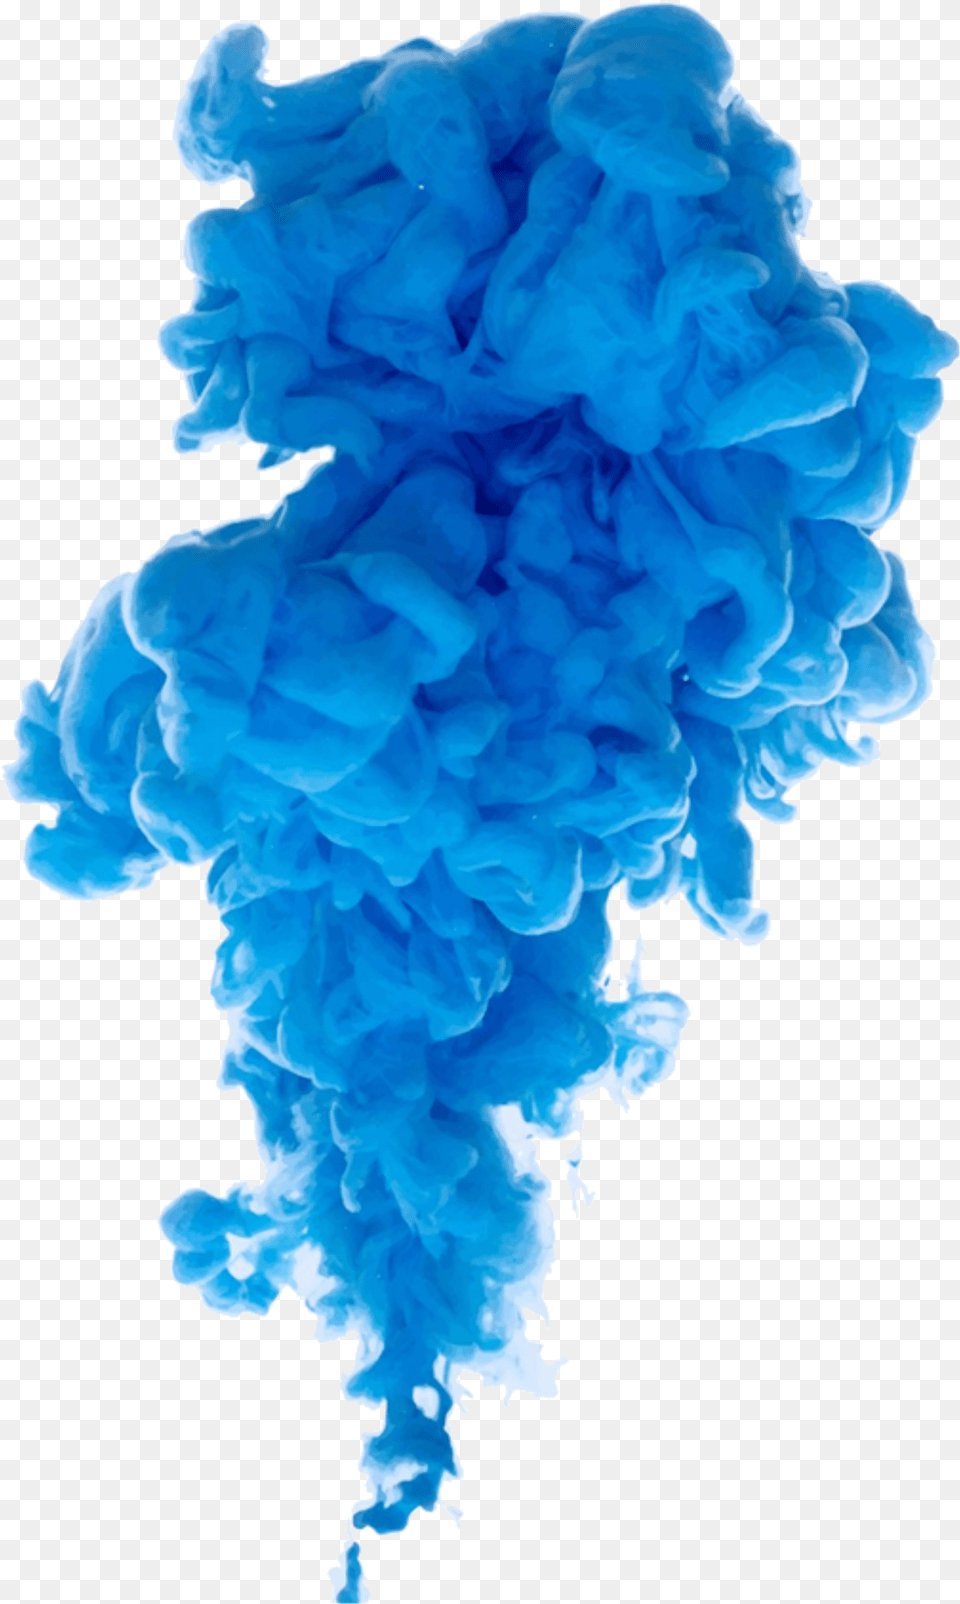 Color Blue Smokeeffect Smoke Smokecolor Bluesmoke Blue Smoke Effect, Person, Towel Free Transparent Png